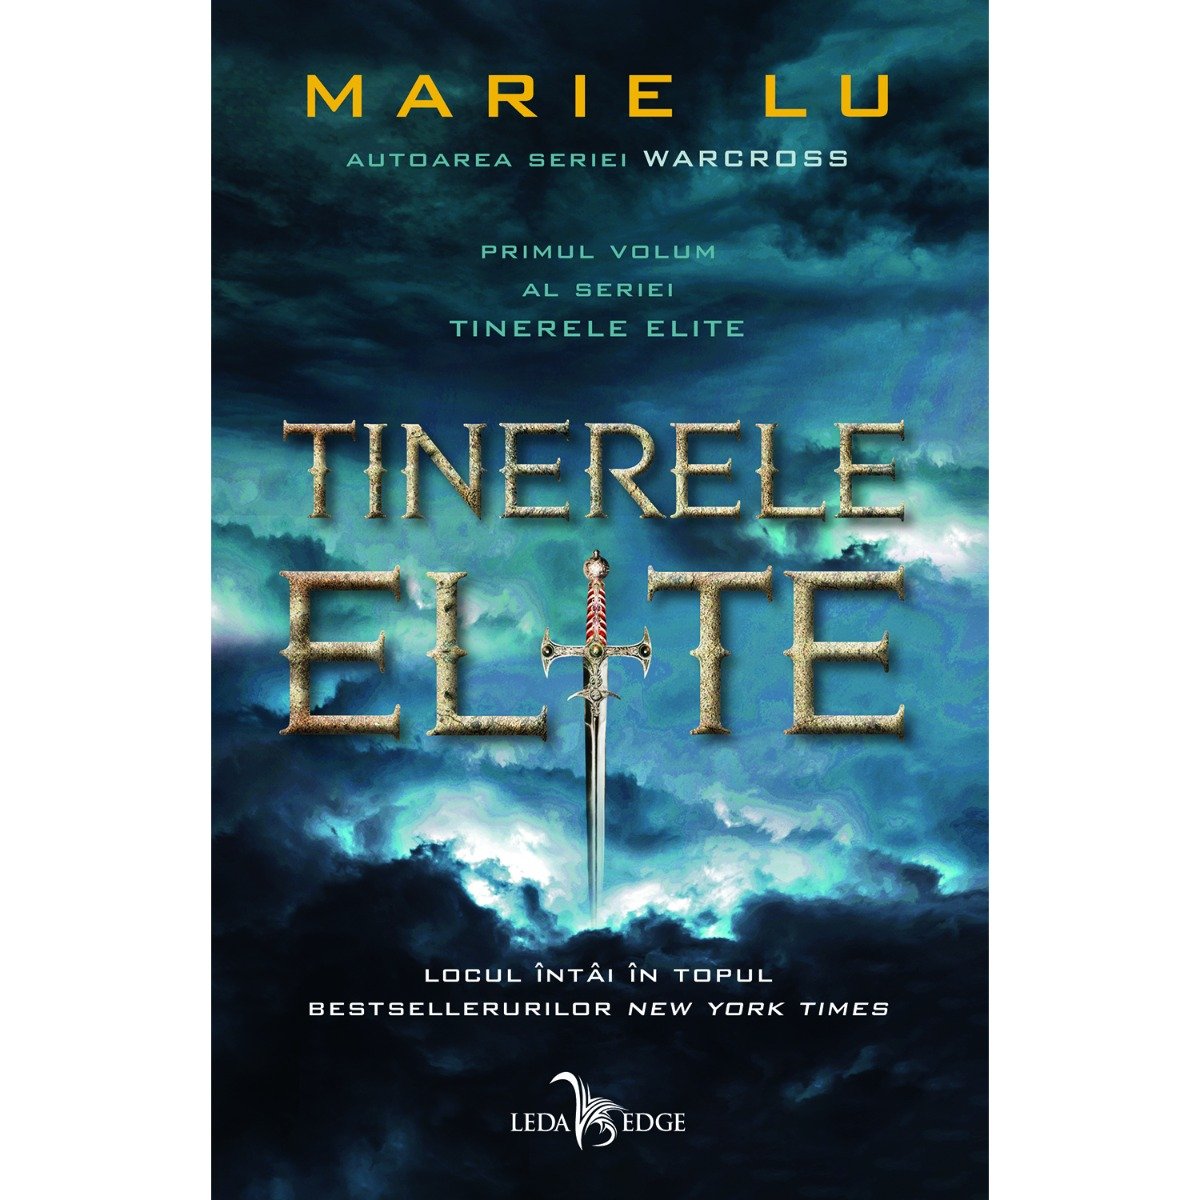 Carte Editura Corint, Tinerele elite vol. 1, Marie Lu